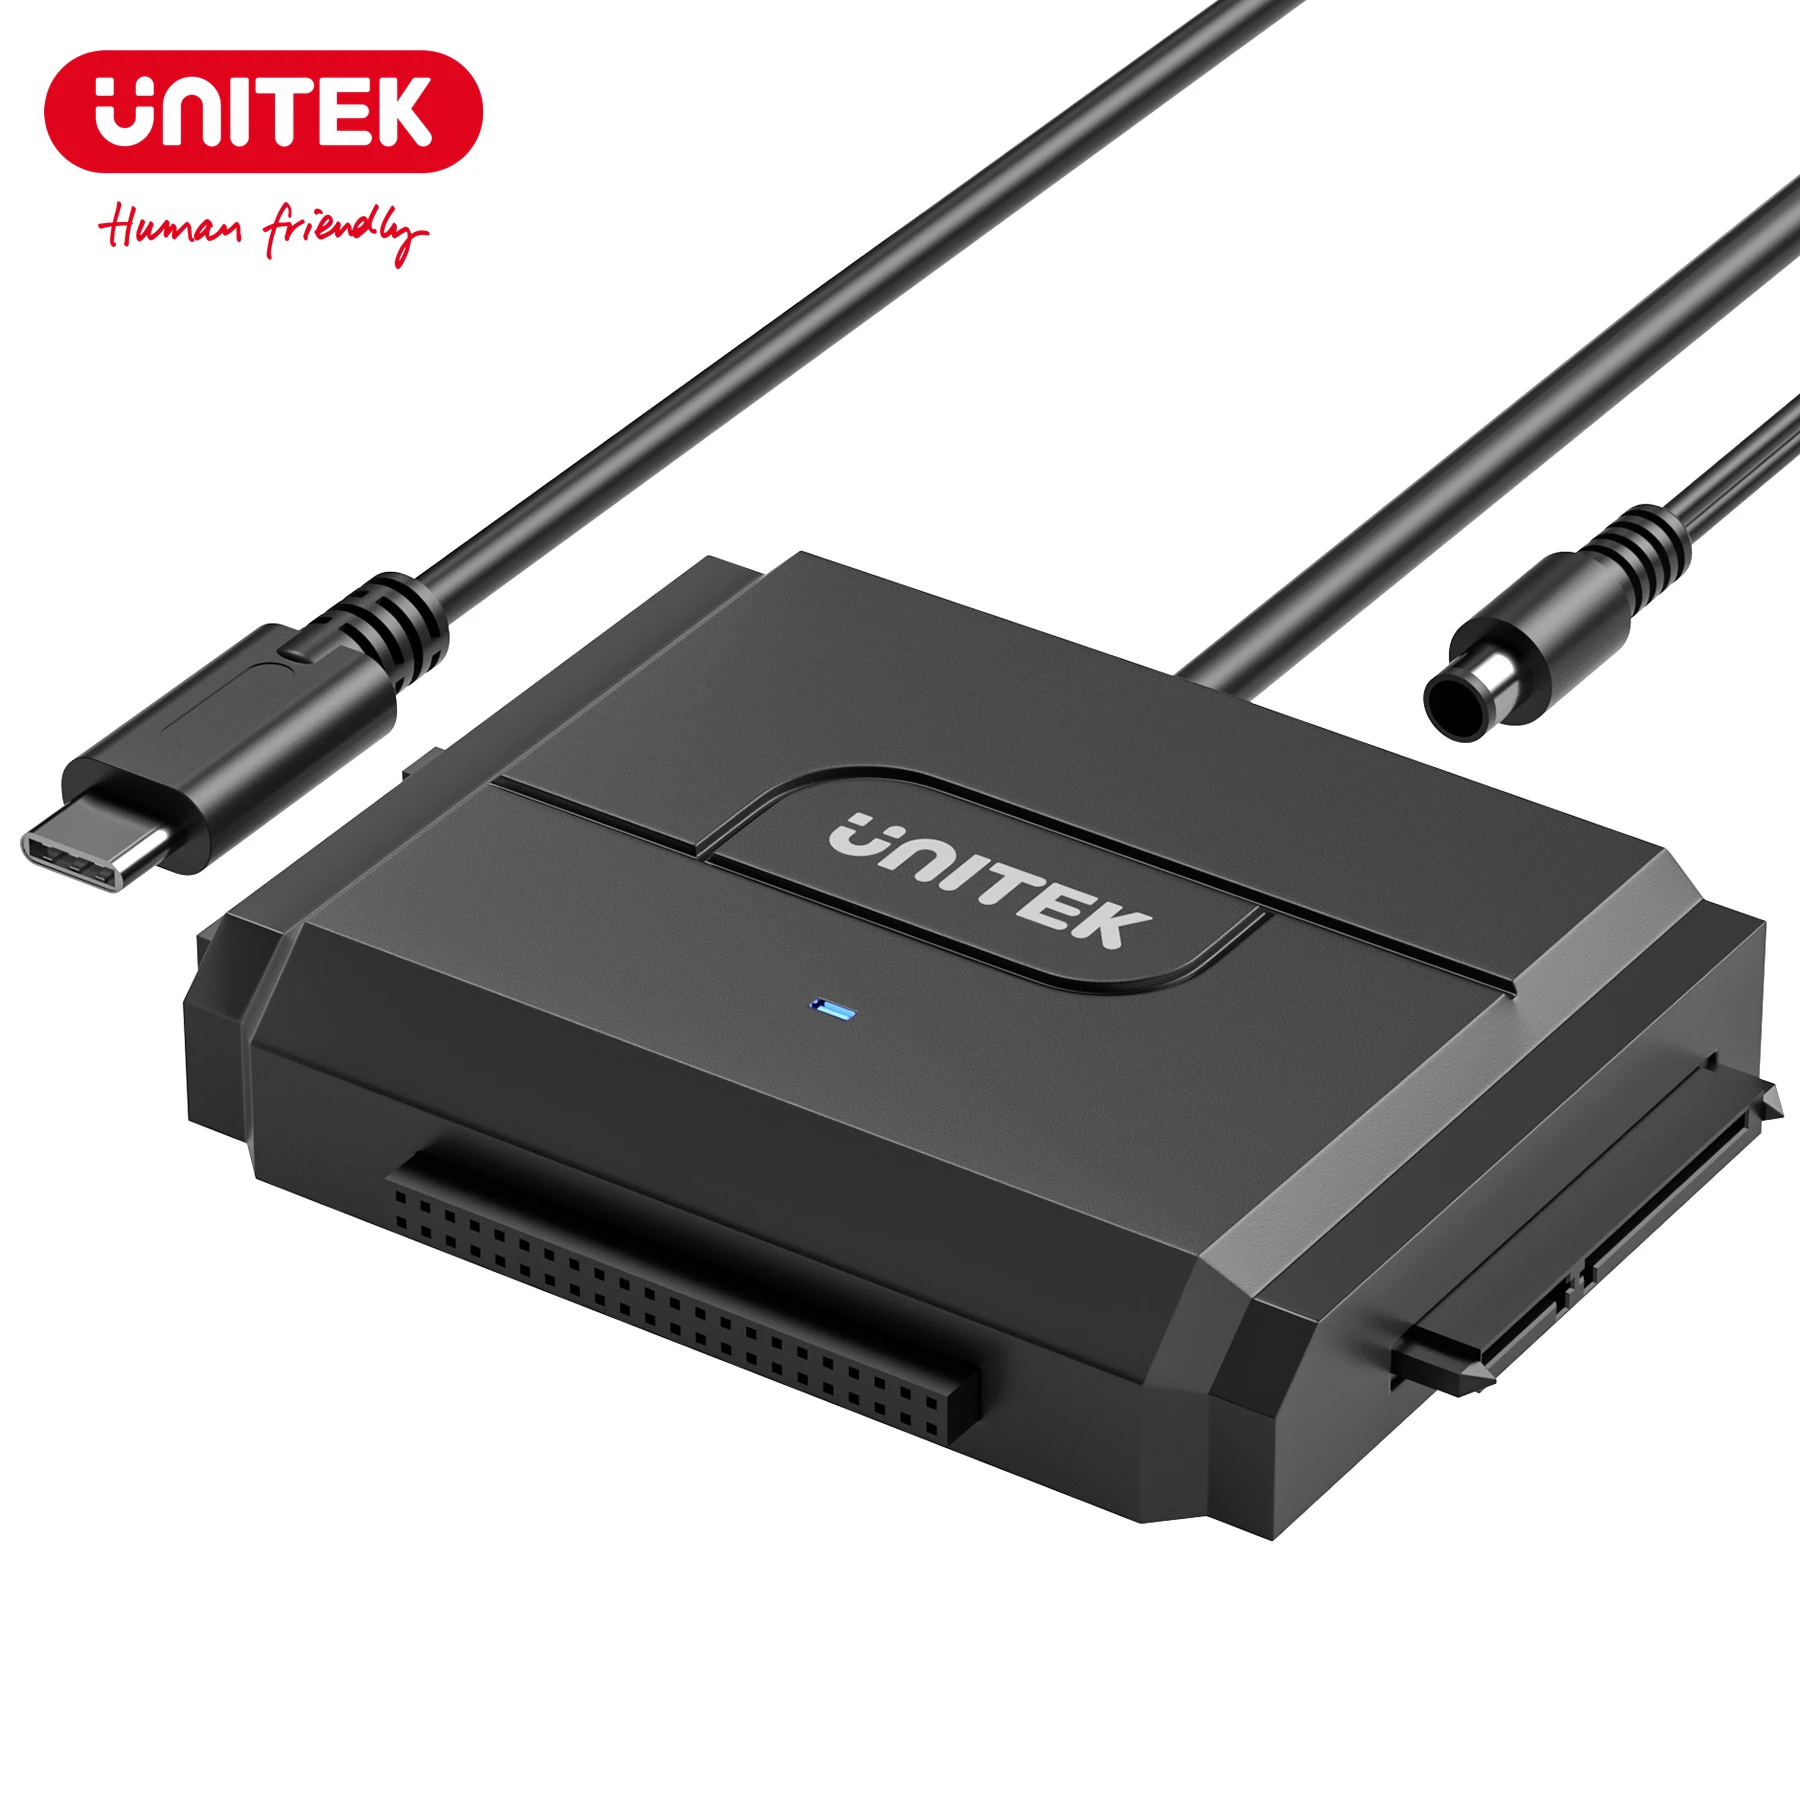 

Unitek USB C 3.0 Hard Drive Adapter Type-C to IDE SATA Hard Drive Converter for 2.5" 3.5 Inch IDE SATA External HDD SSD 10TB